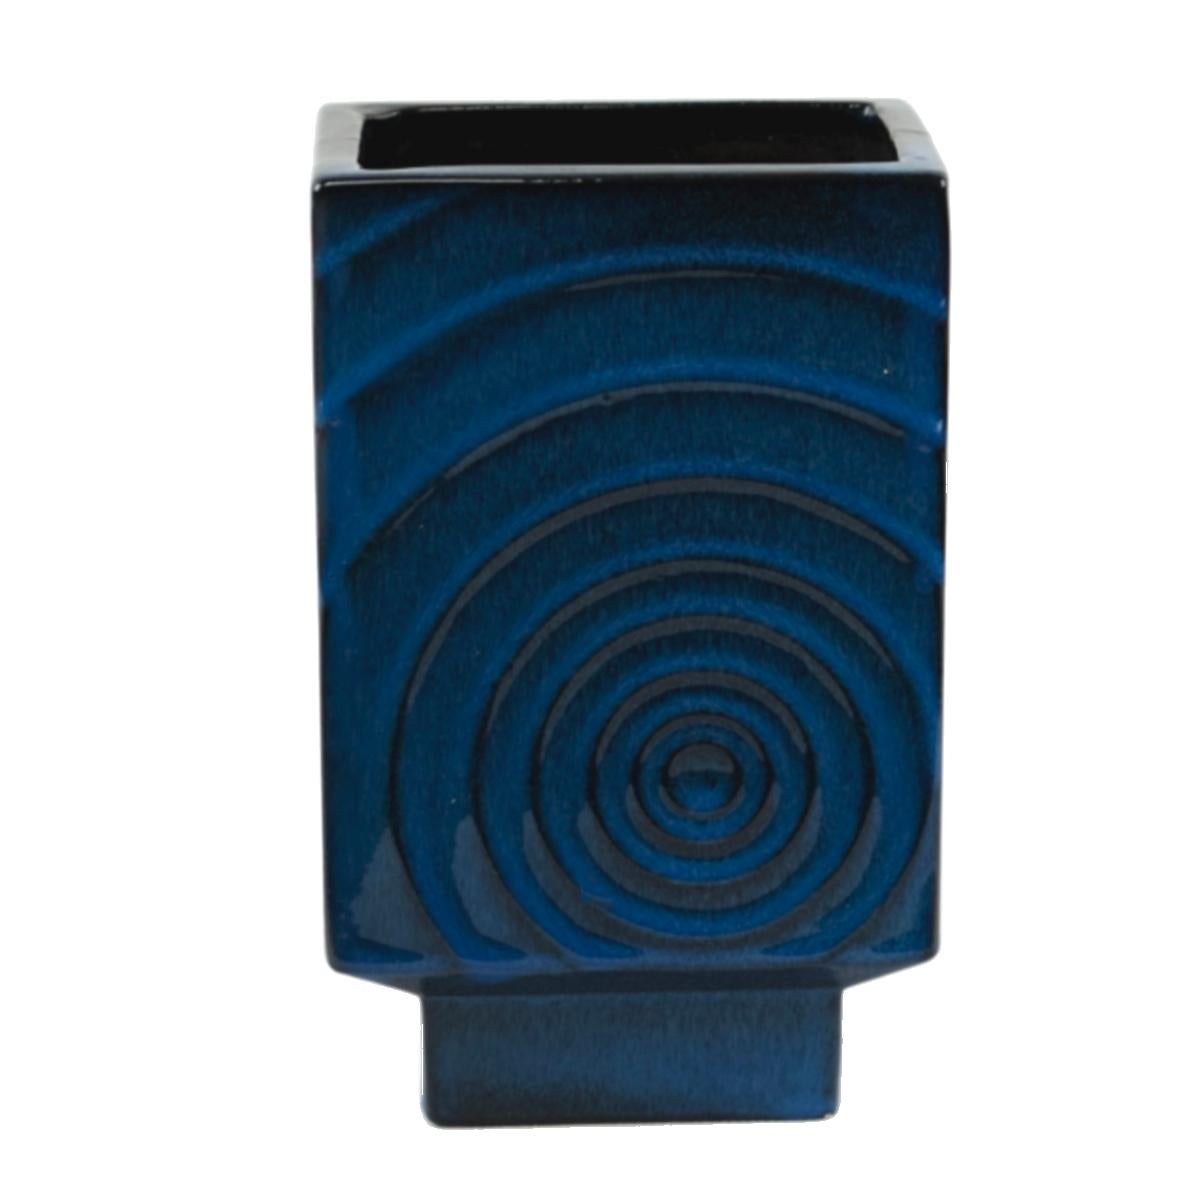 Set of 3 Cari Zalloni for Steuler ceramic blue-black „ Zyklon“ vases  1060s In Excellent Condition For Sale In Berlin, DE